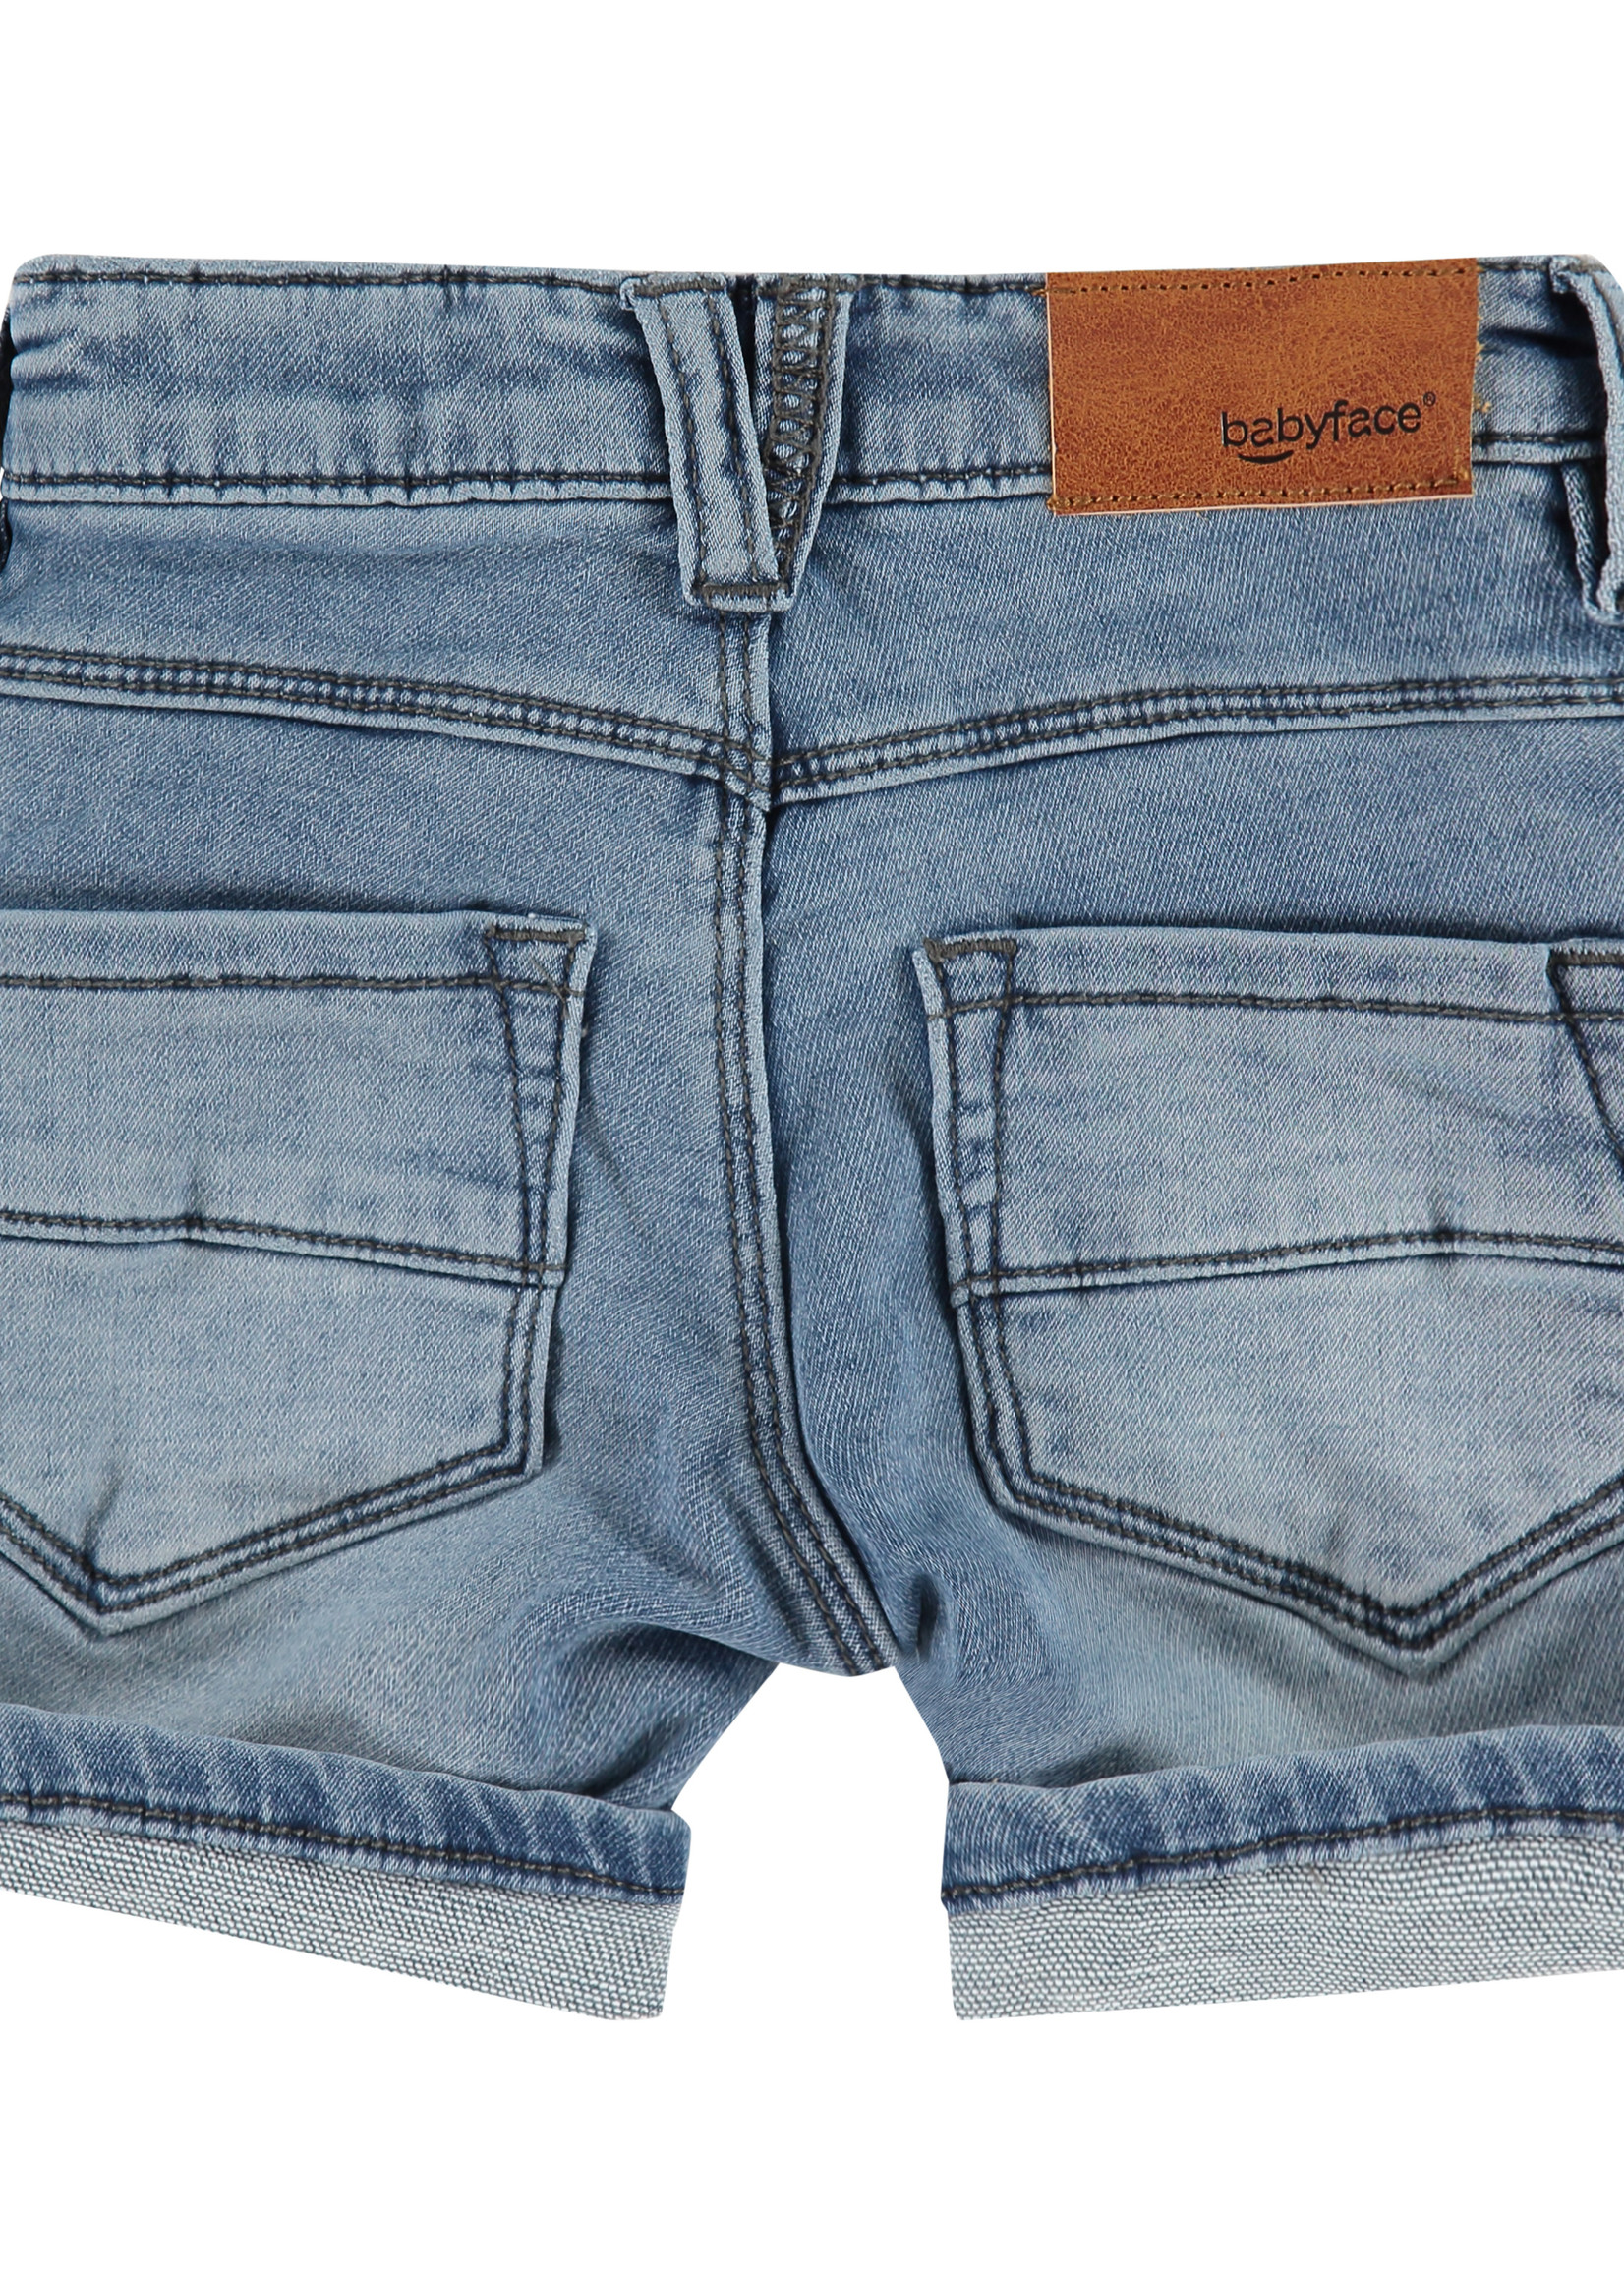 Babyface boys jogg jeansshort, medium blue denim, BBE21107239